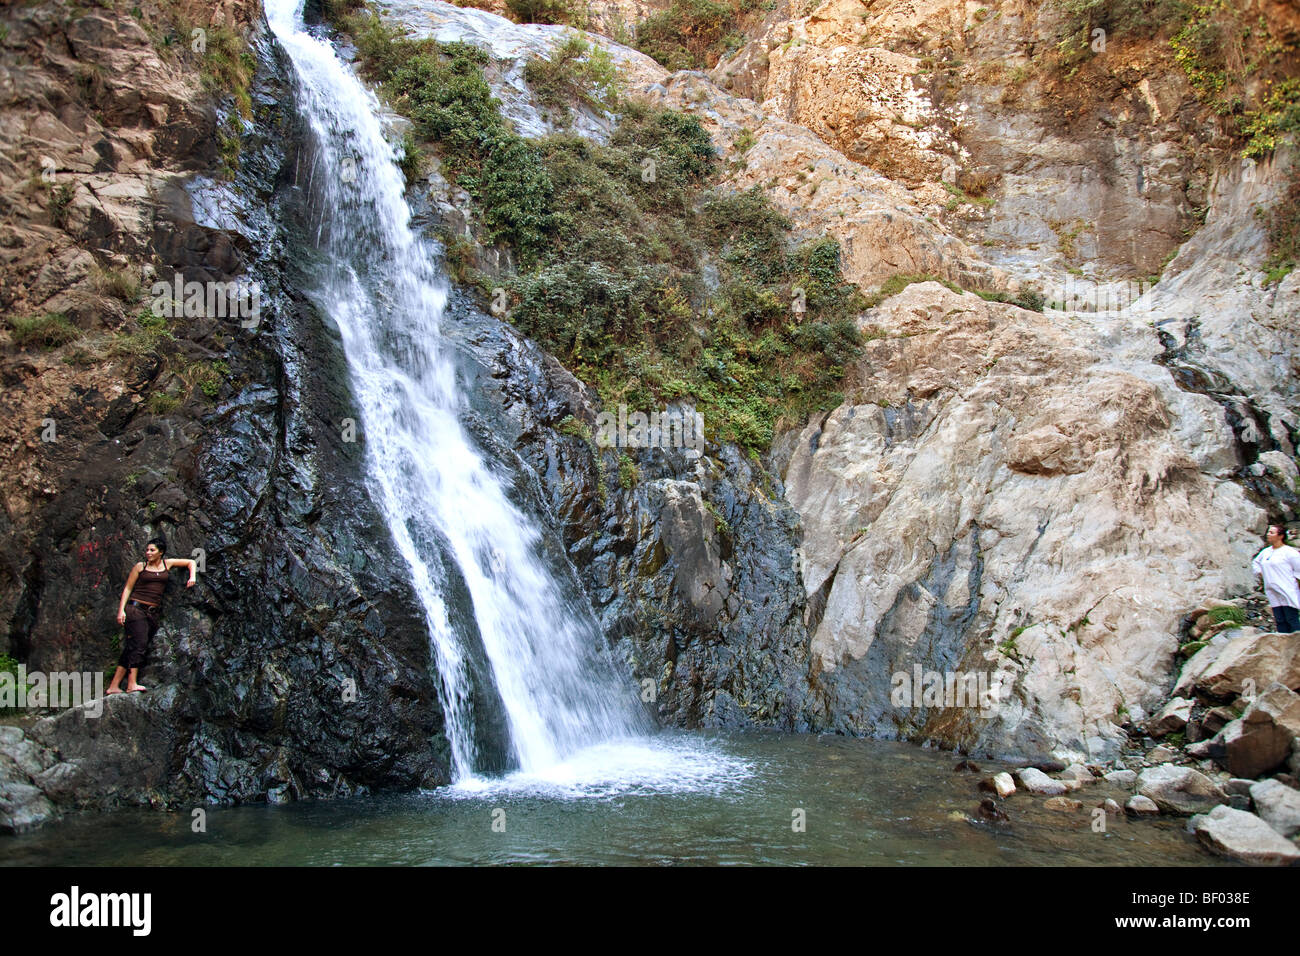 Touristen besuchen Wasserfall in Setti Fatma Berber Dorf im Ourika Tal, Atlasgebirge, Marokko. Stockfoto